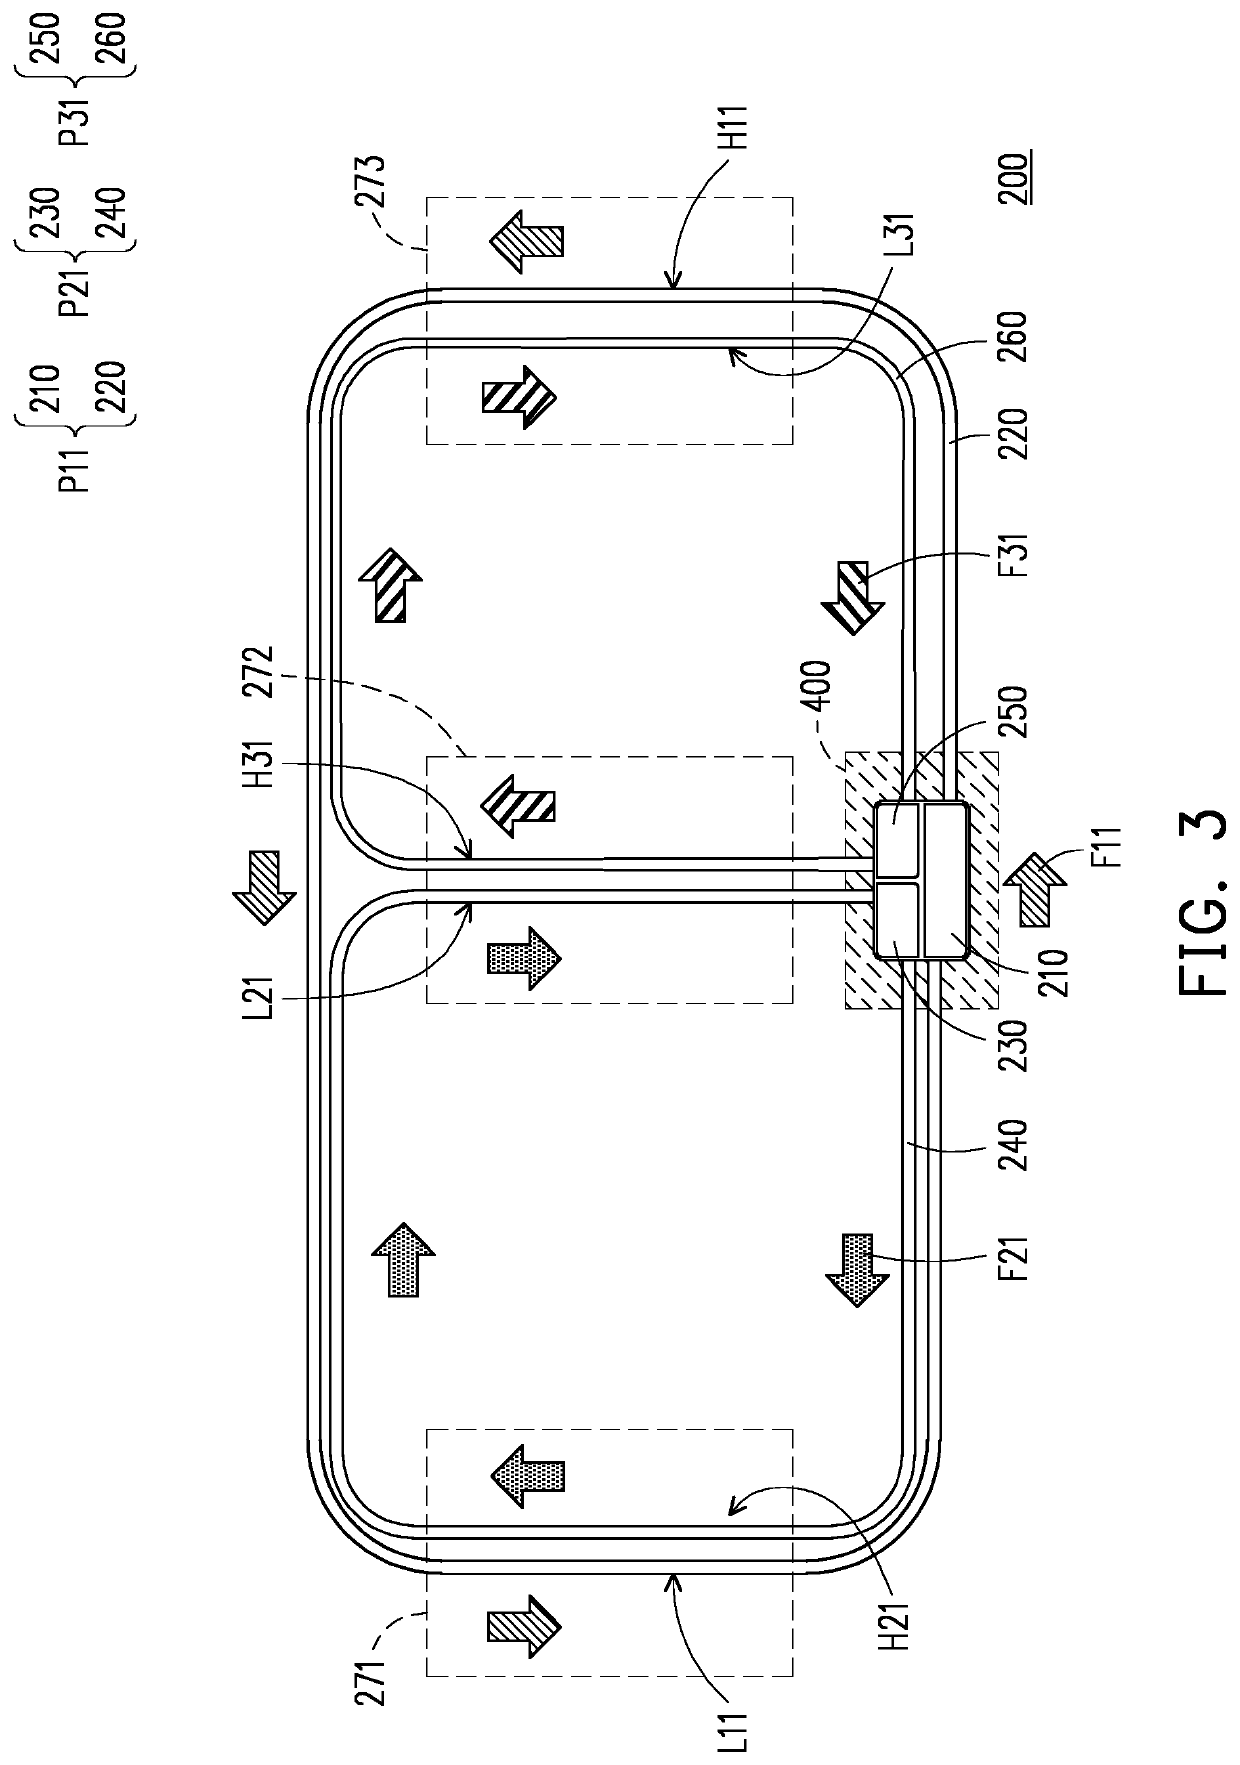 Multi-loop cycling heat dissipation module